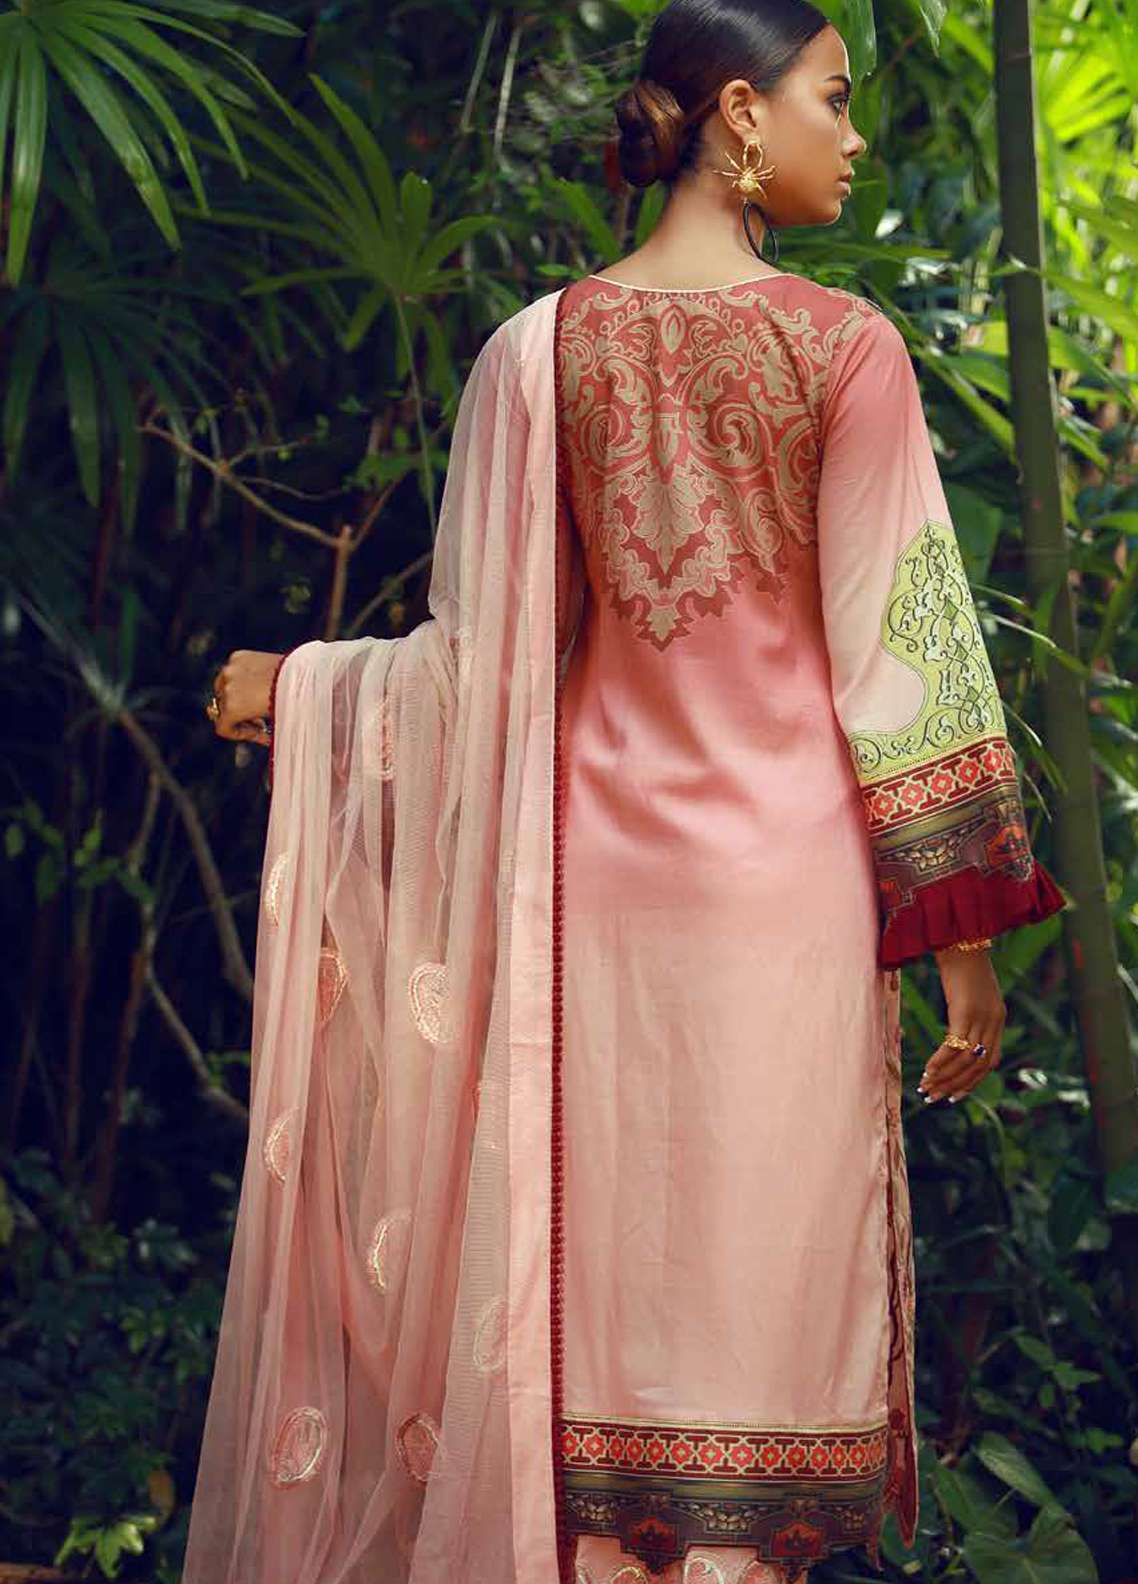 Tena Durrani Embroidered Lawn Unstitched 3 Piece Suit - 10 Morrocon Mint - Eid ul Azha Collection